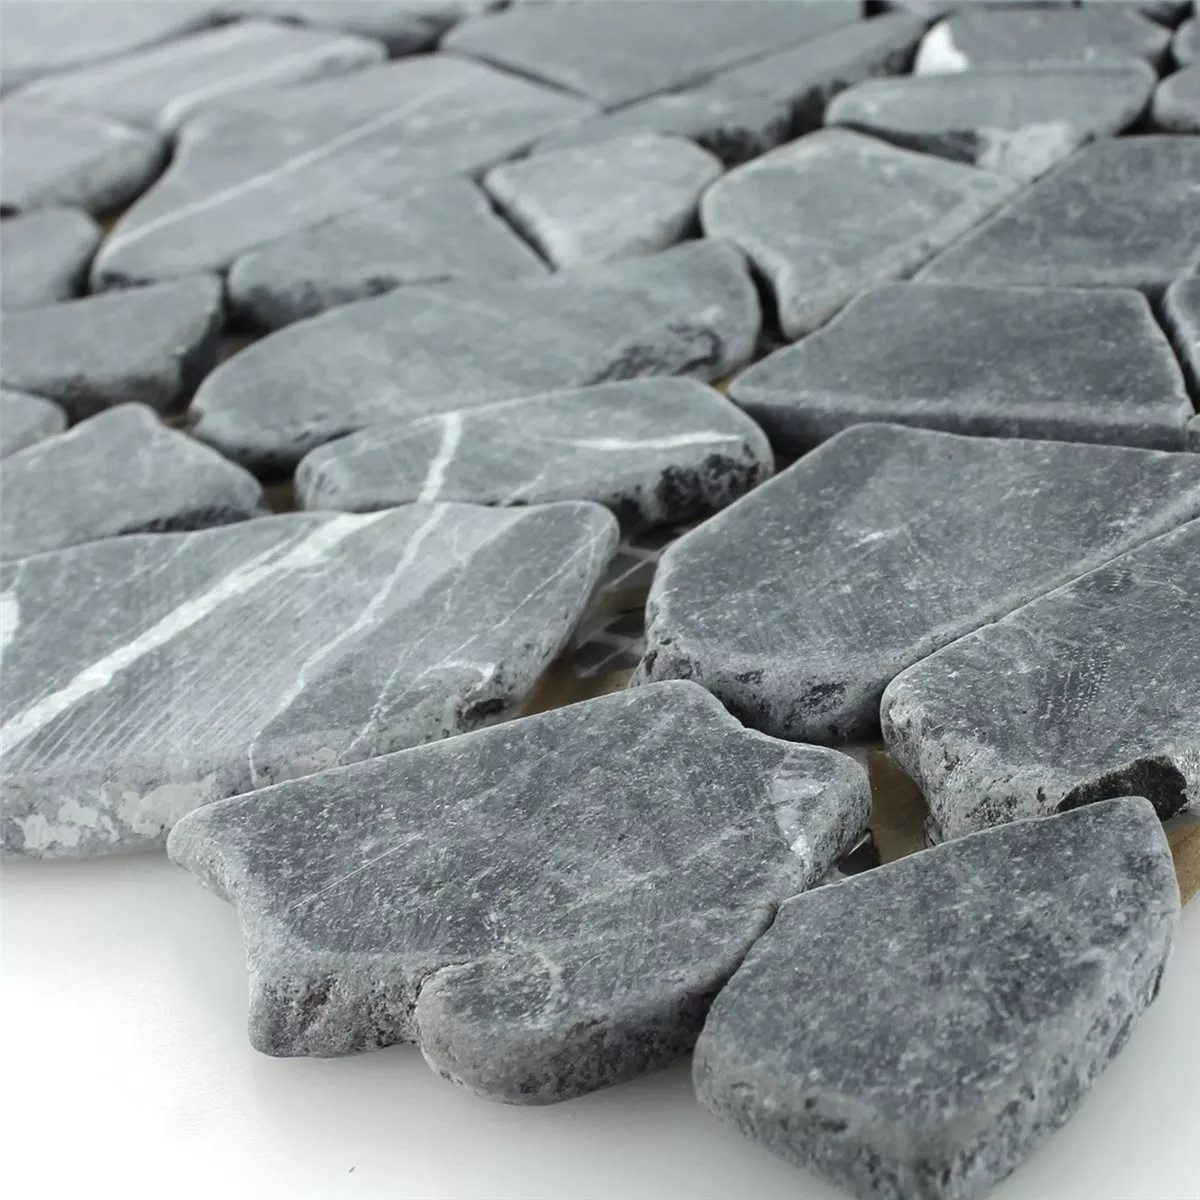 Sample Mosaic Tiles Broken Marble Nero Carrara